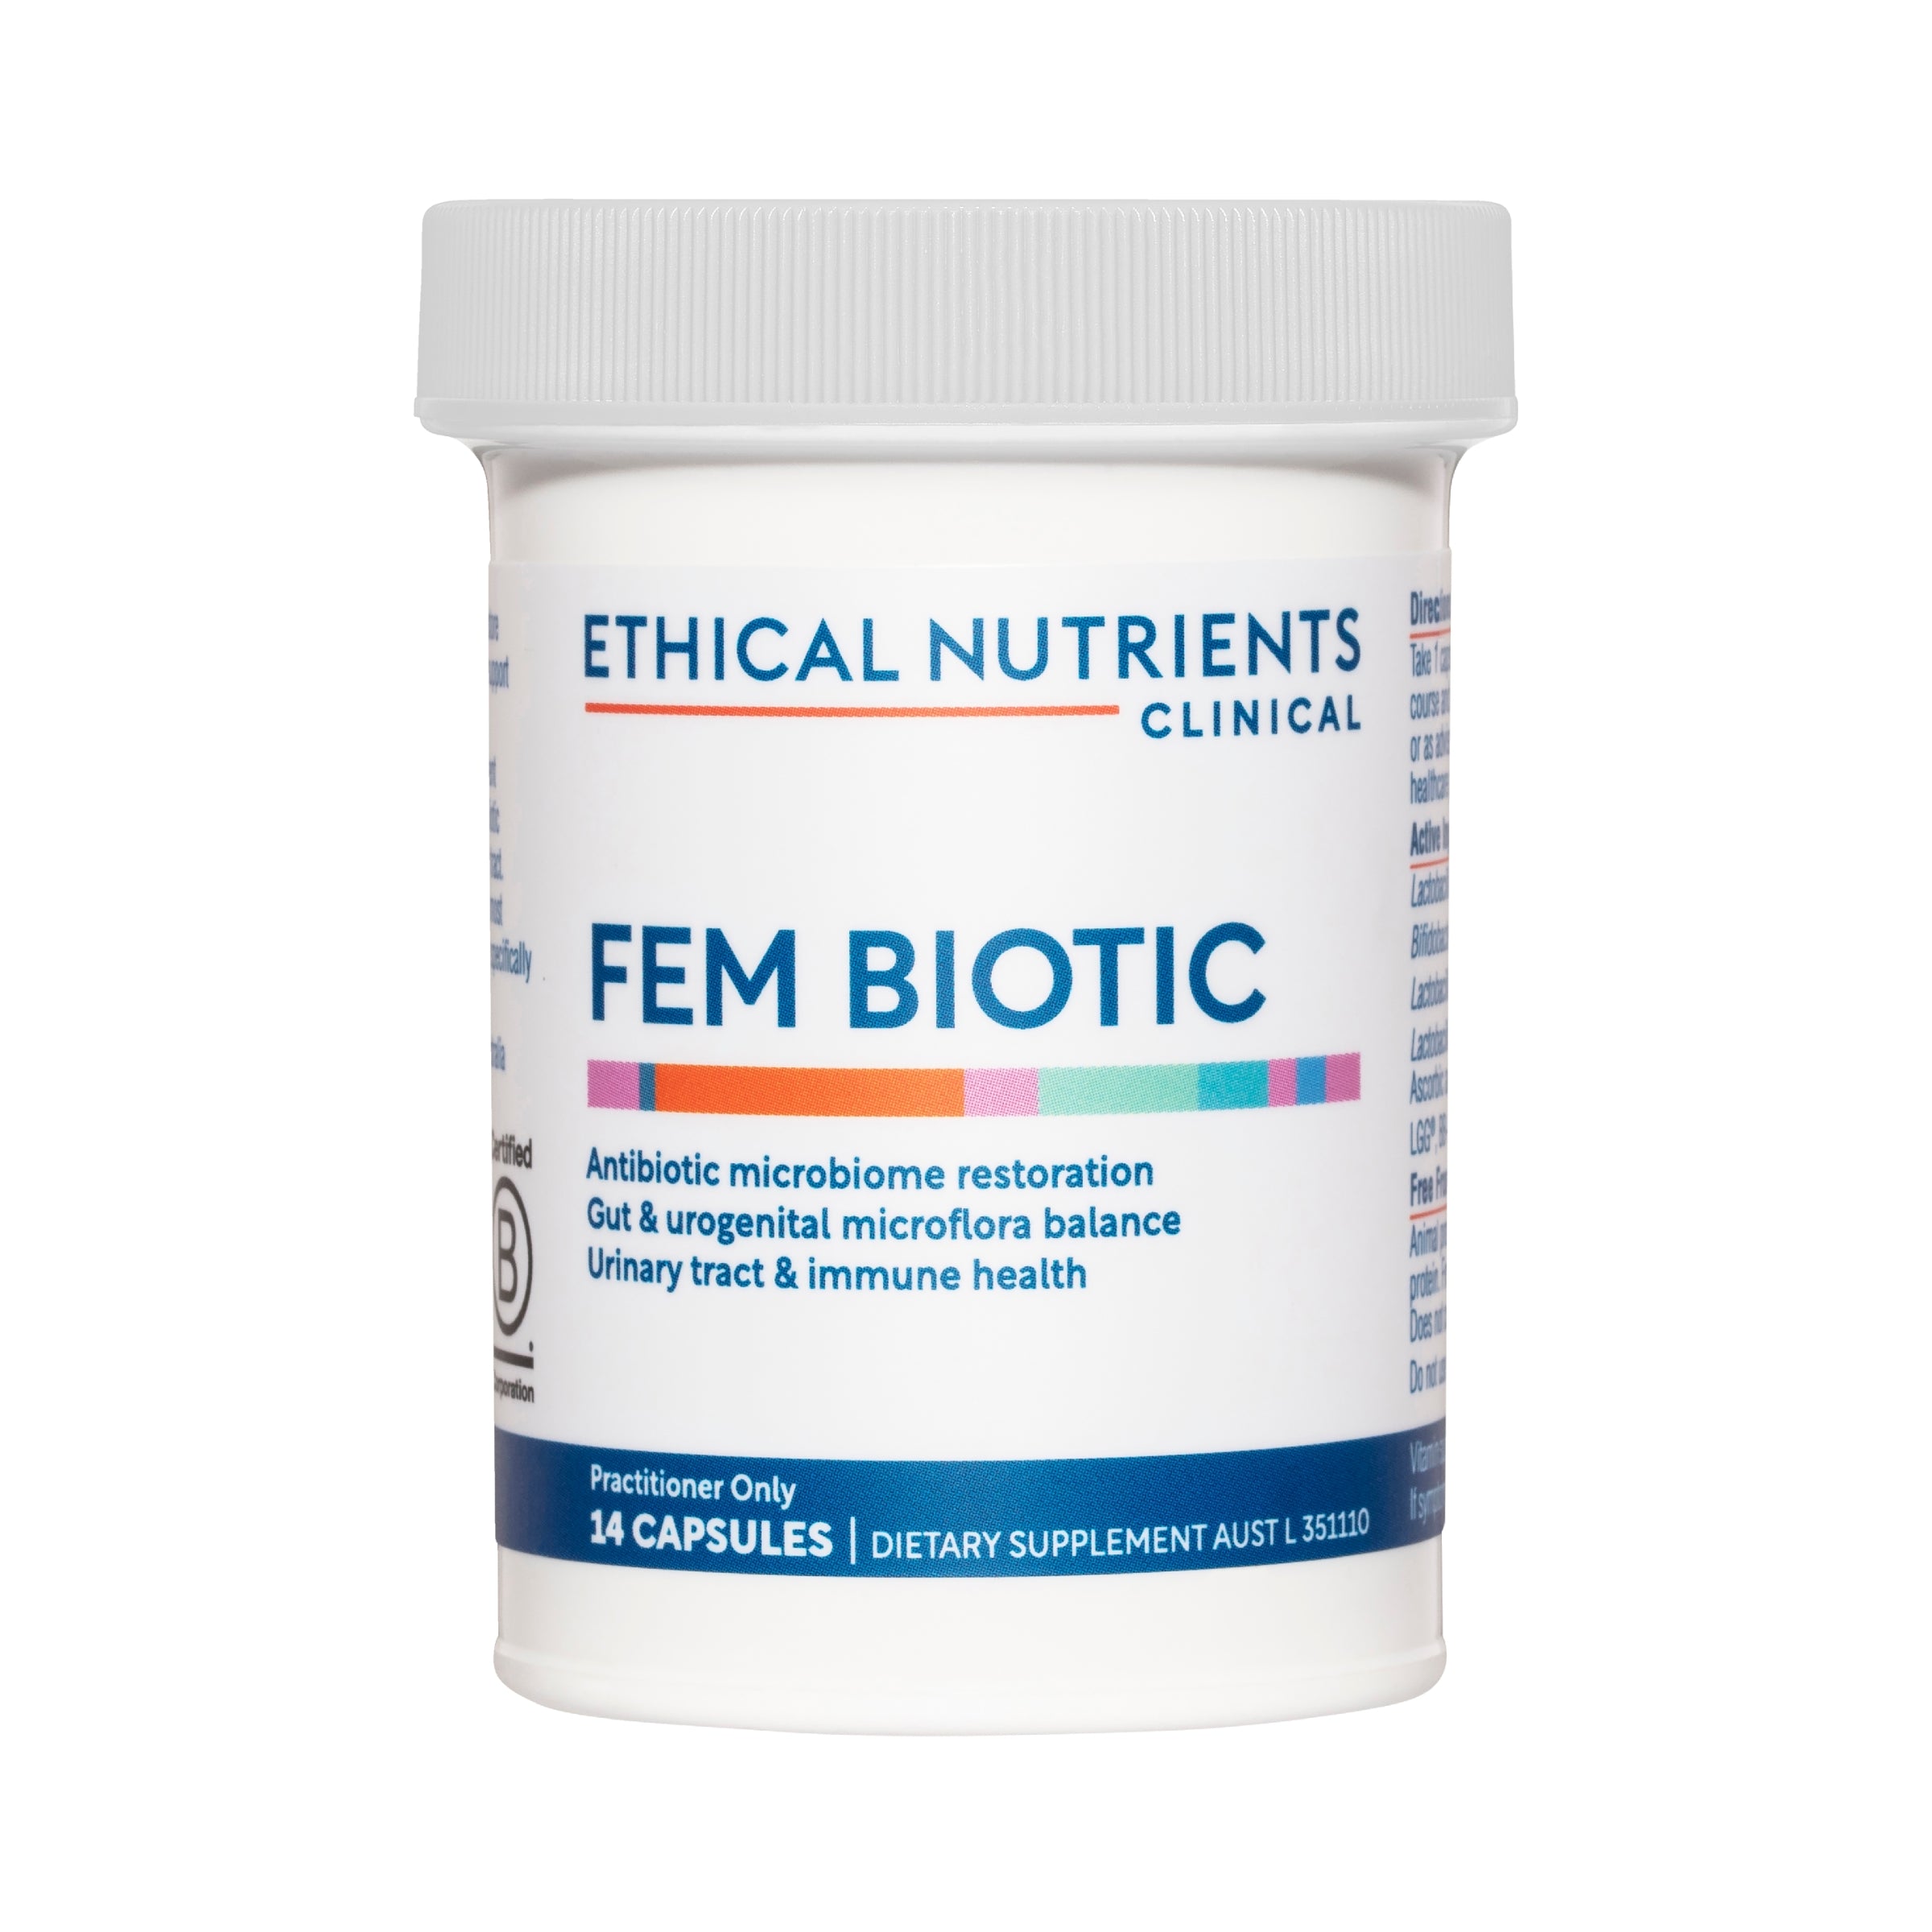 Ethical Nutrients Clinical Fem Biotic Bottle